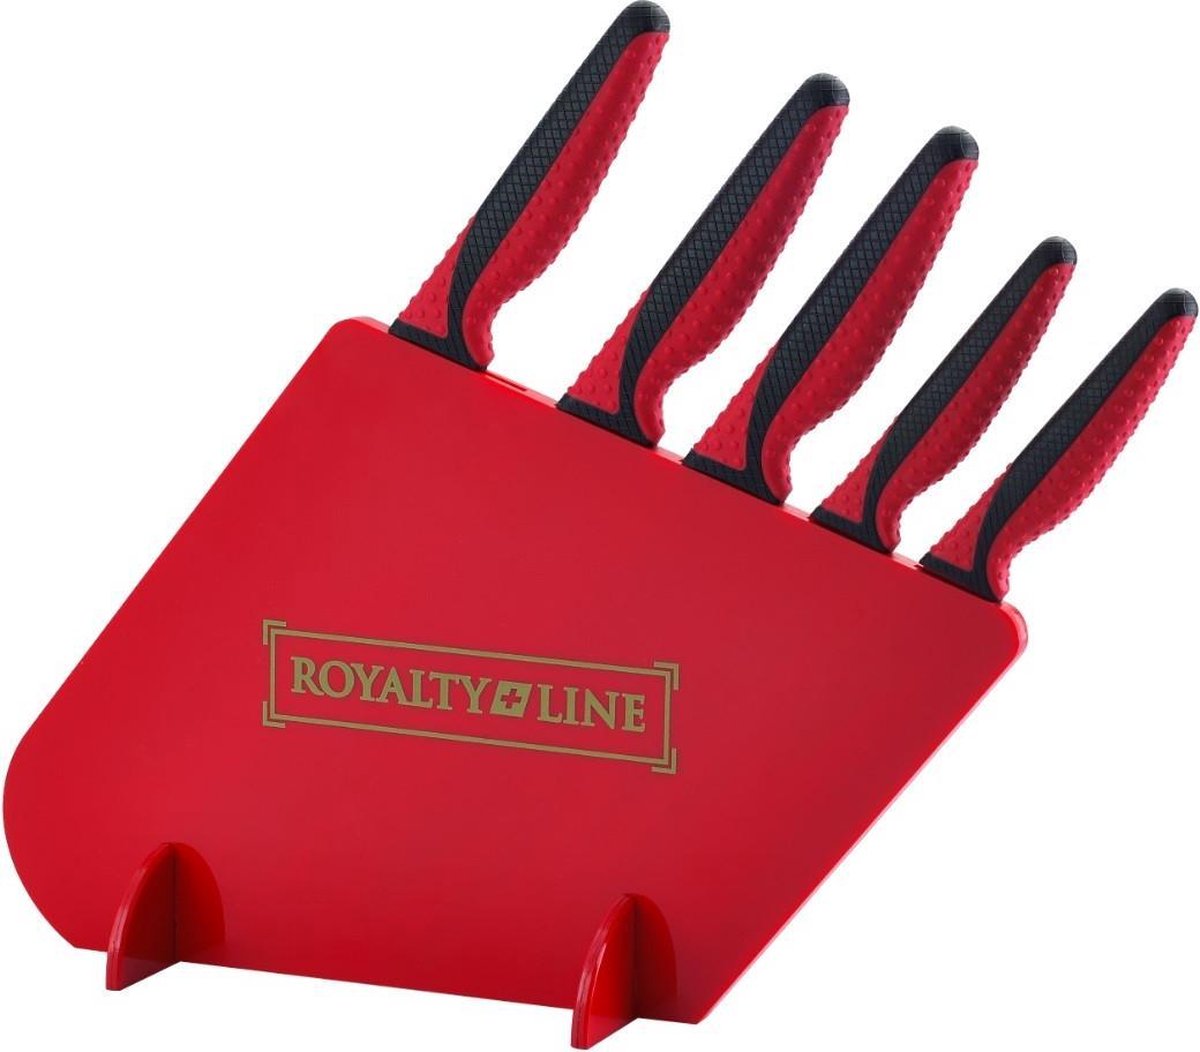 Royalty Line messenblok - 5-delig - zwart/rood - RVS - Non-stick coating